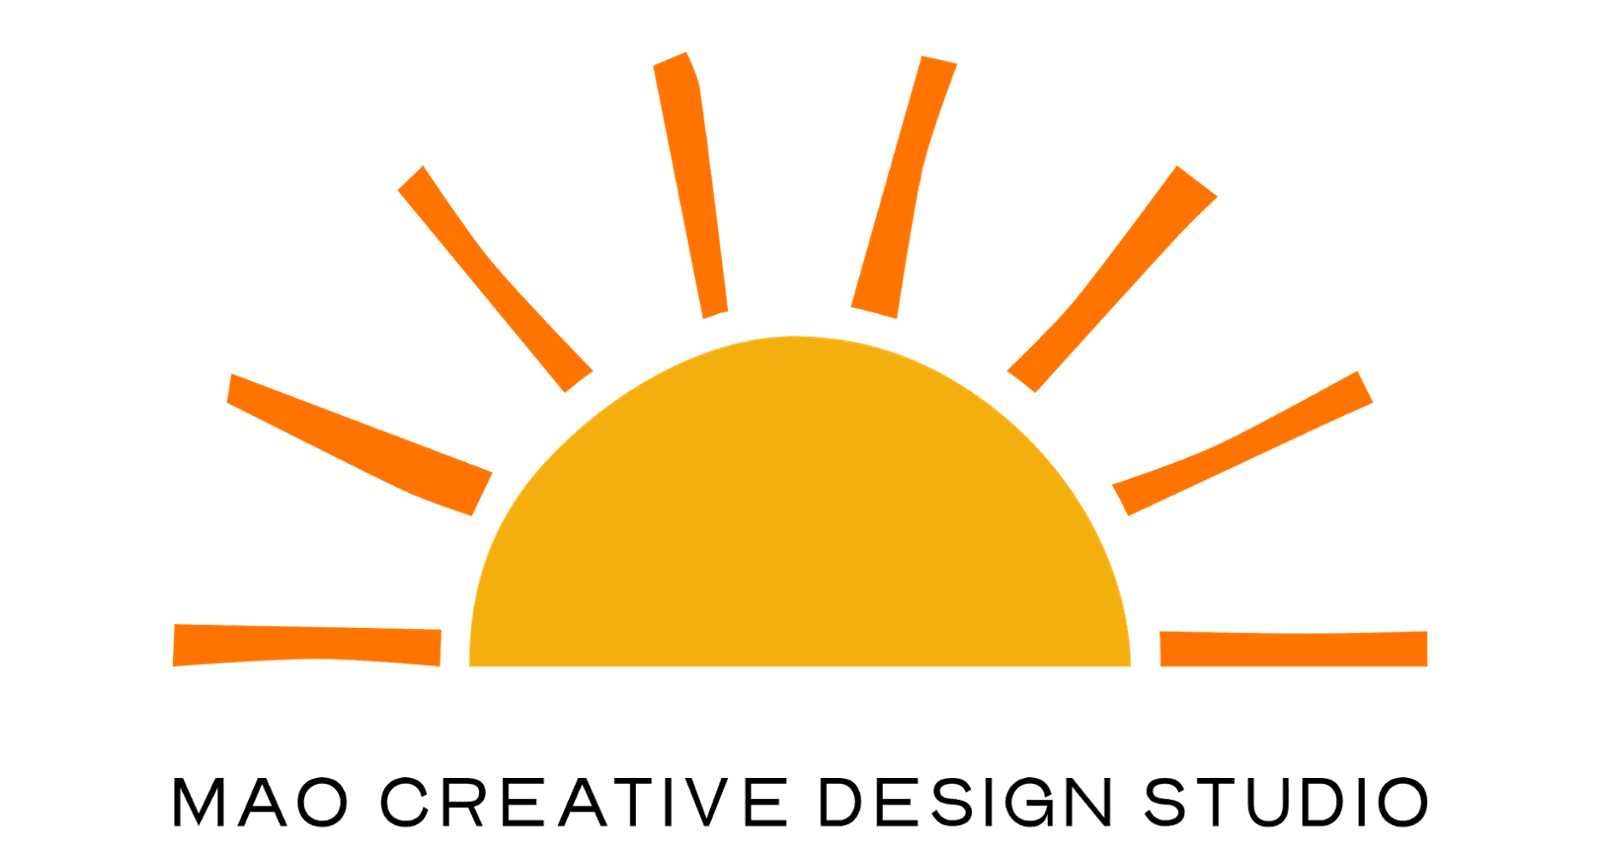 MAO Creative Design Studio